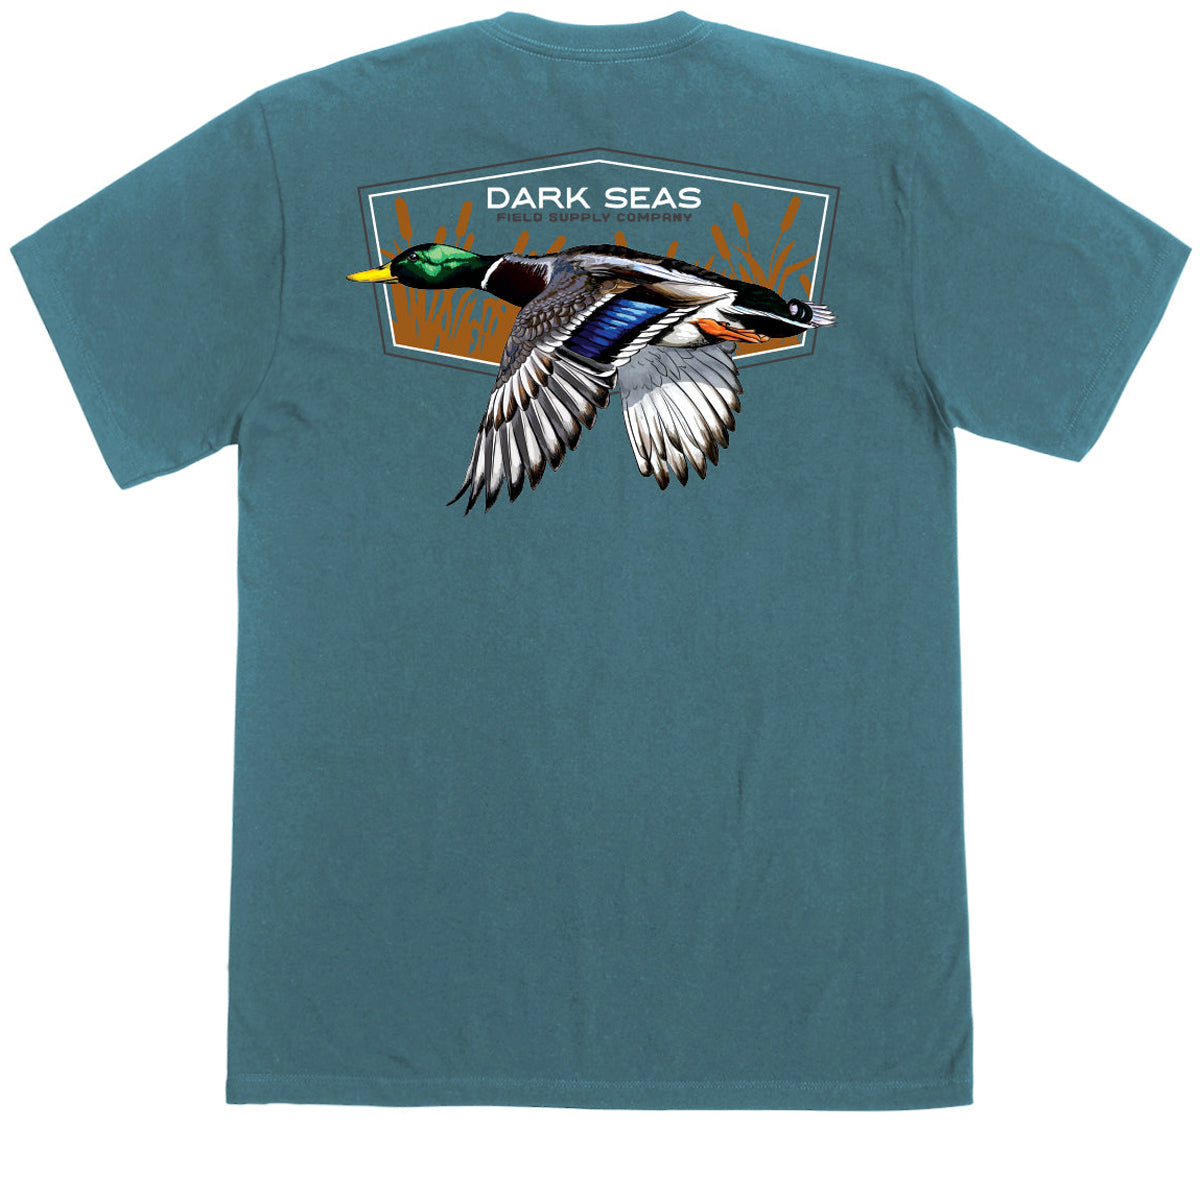 Dark Seas Mallard T-Shirt - Bistro Green image 1